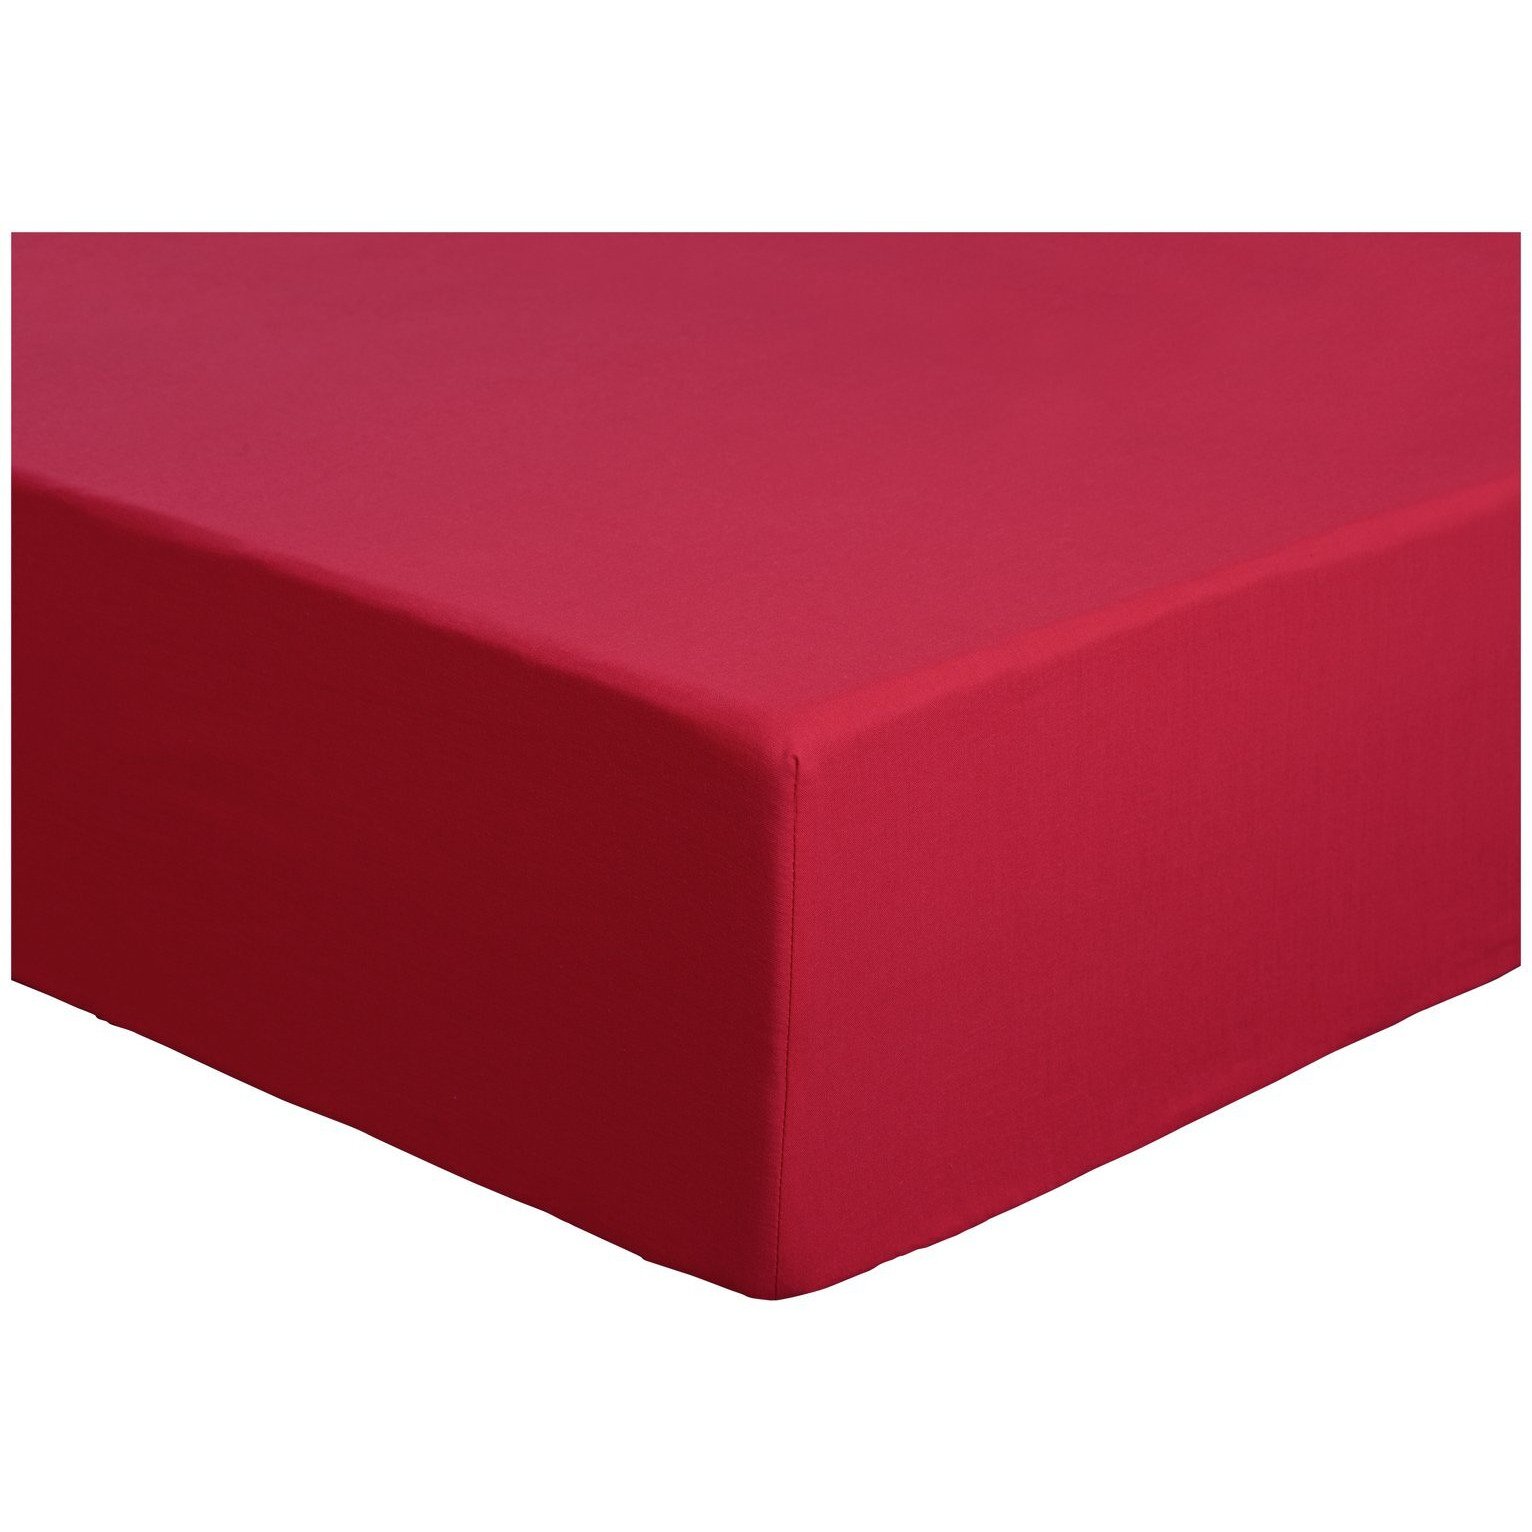 Habitat Easycare Plain Red Fitted Sheet - Single - image 1